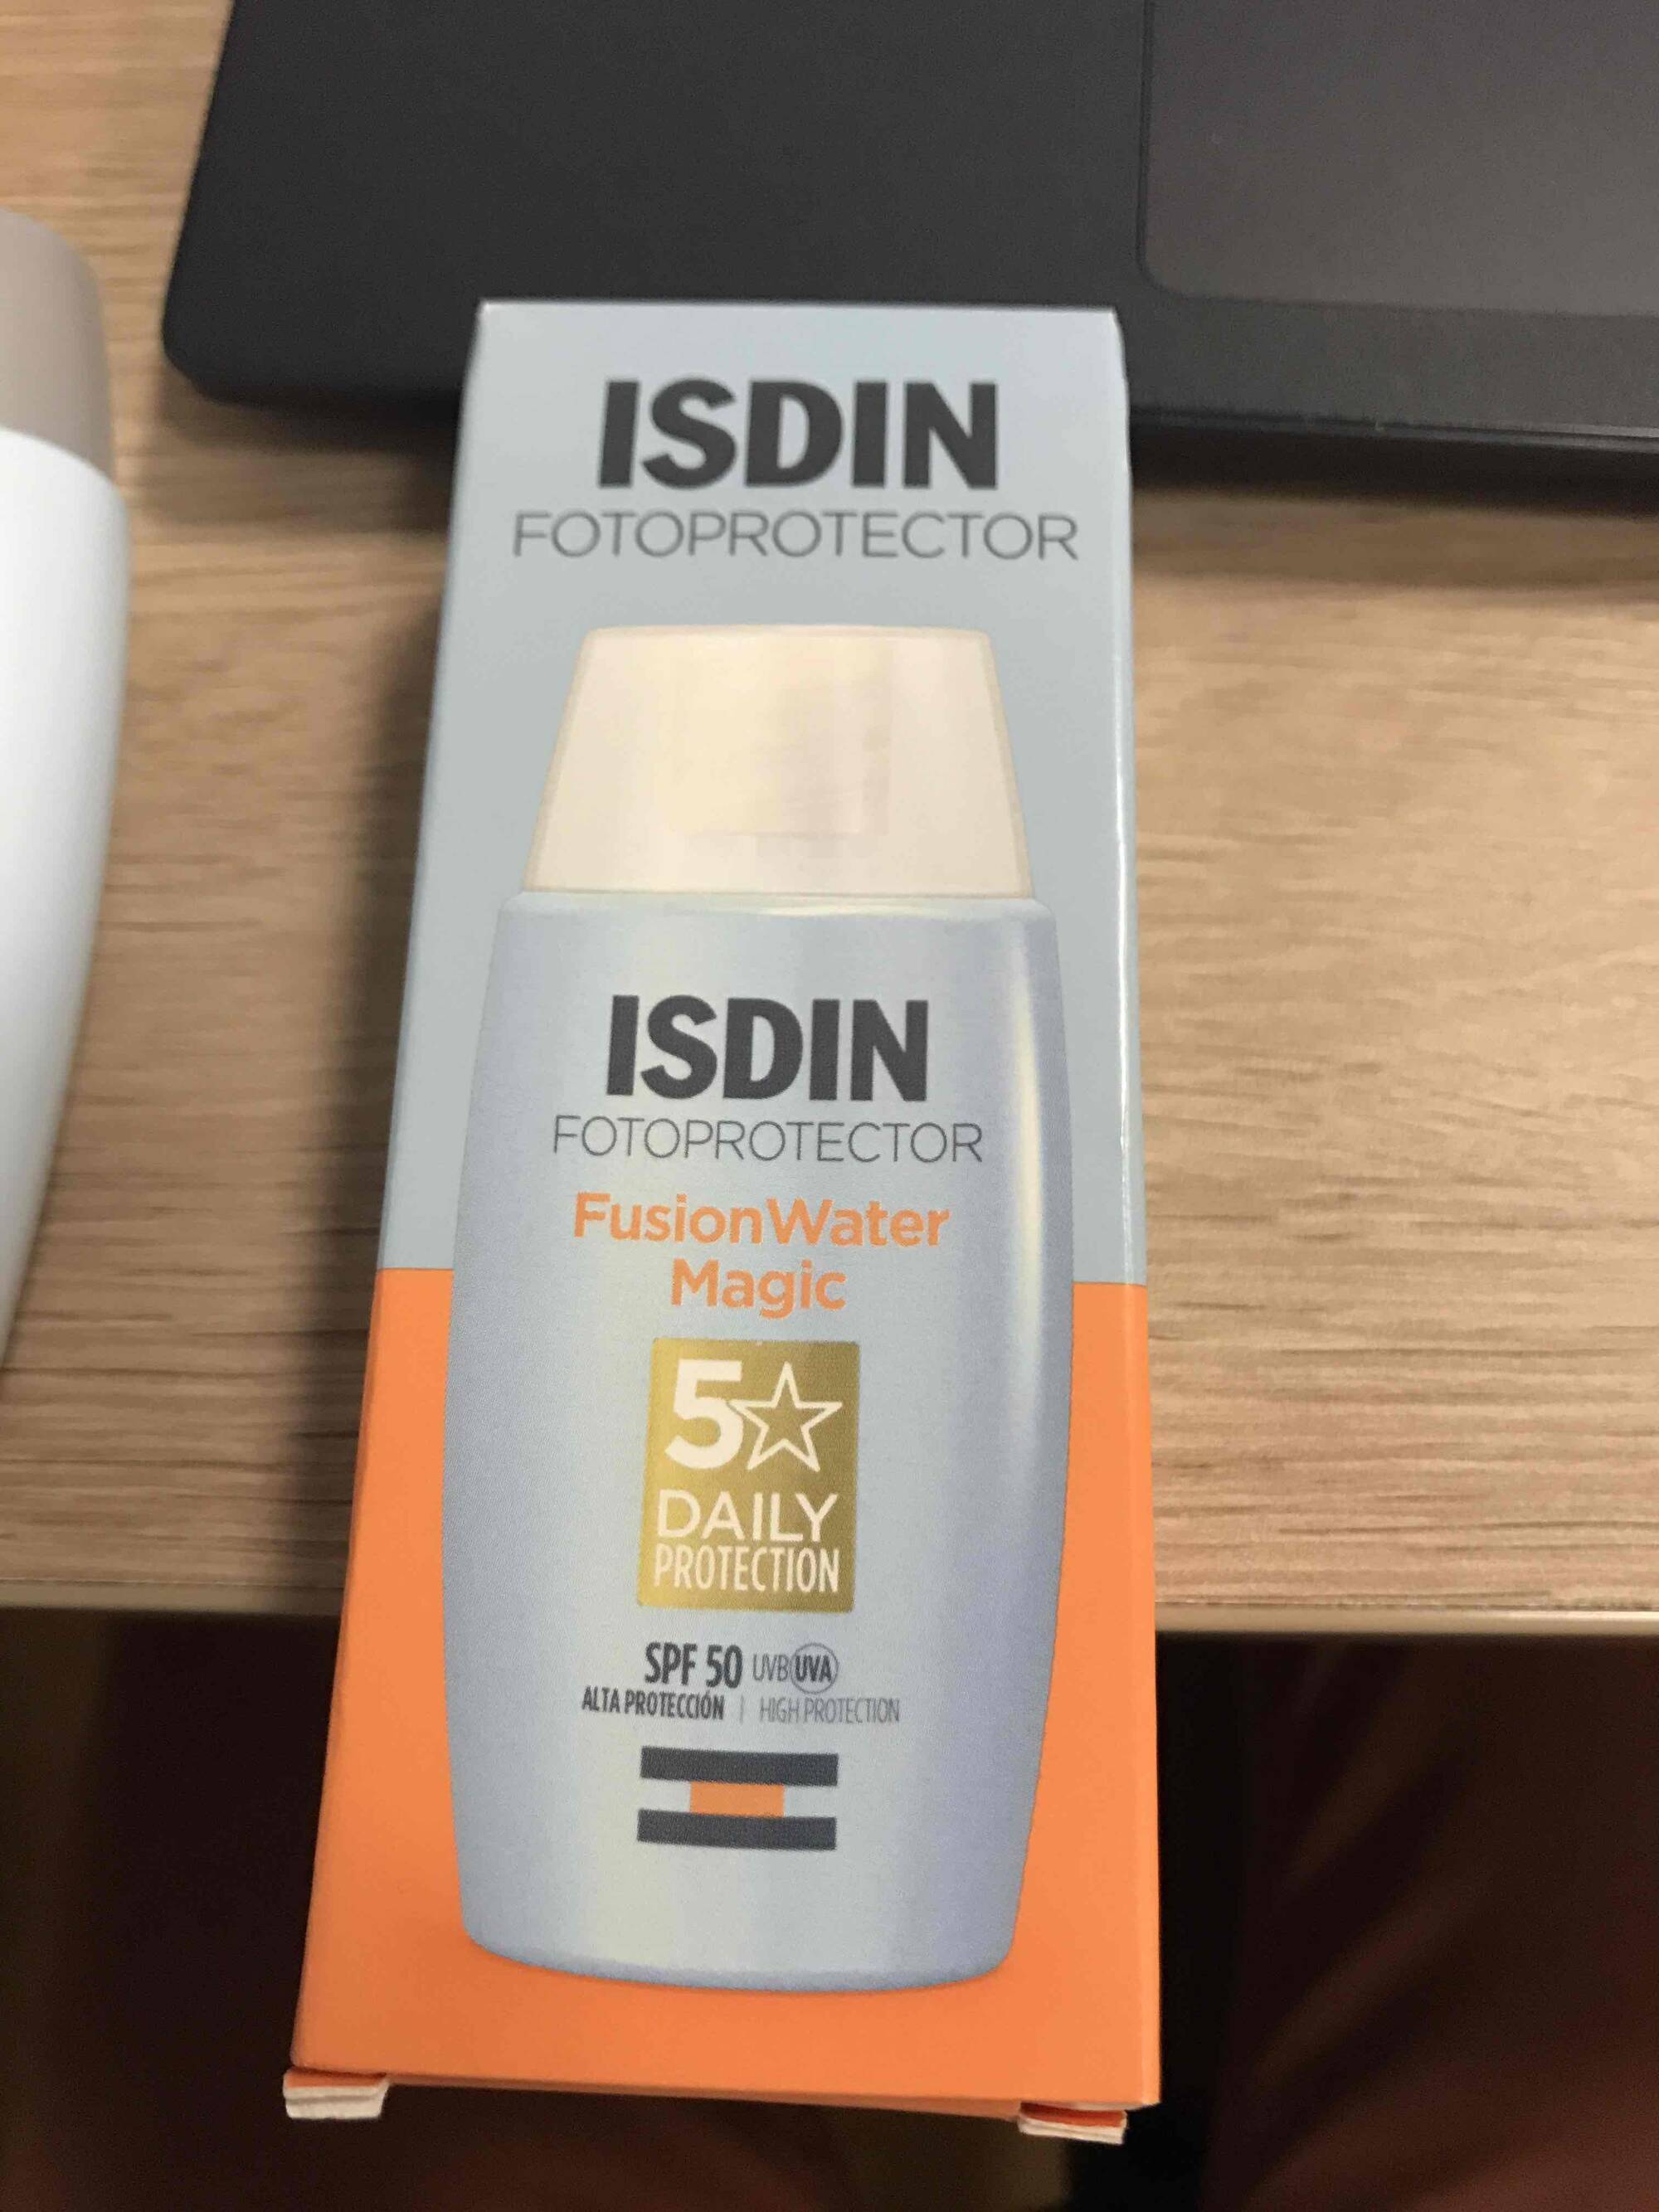 ISDIN - Fotoprotector -  Fusion water magic spf 50